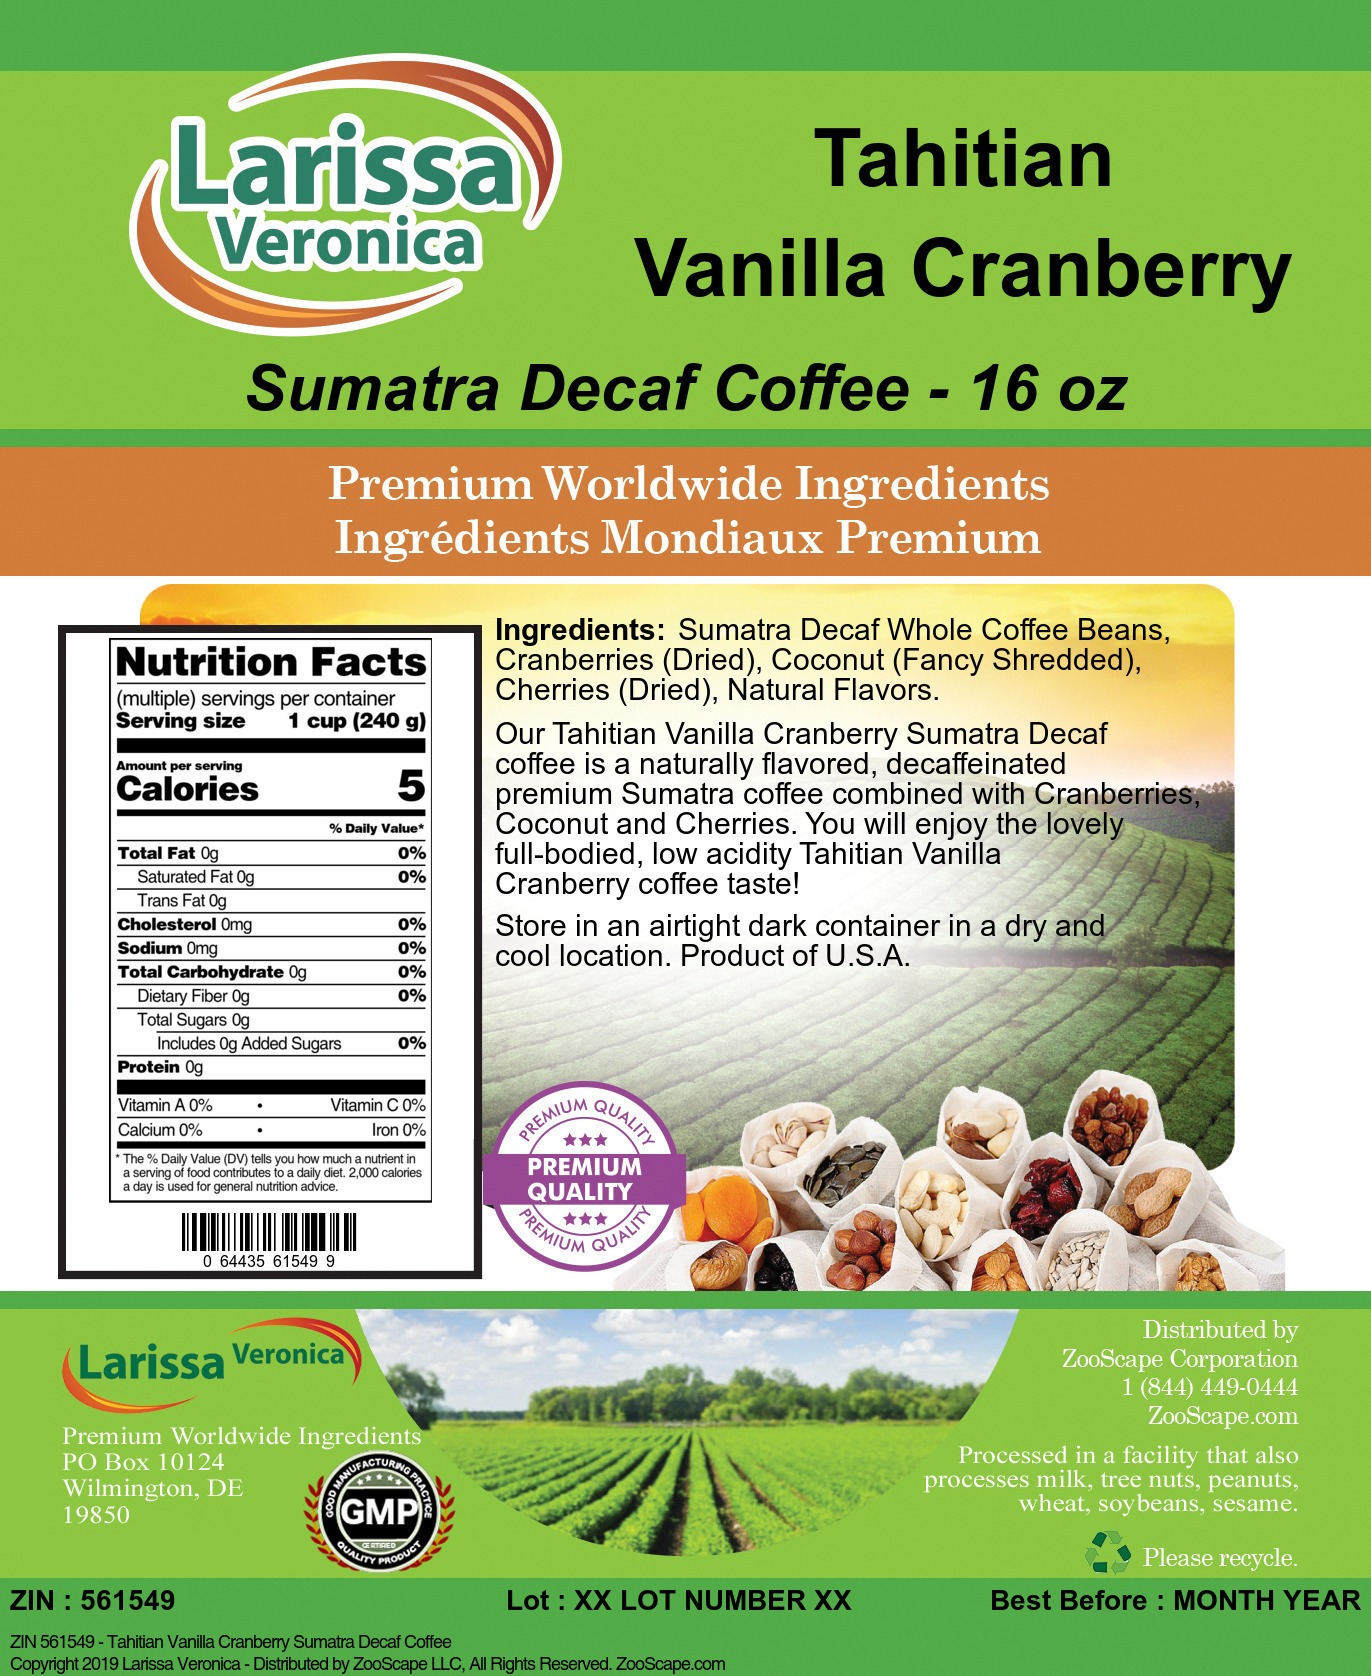 Tahitian Vanilla Cranberry Sumatra Decaf Coffee - Label